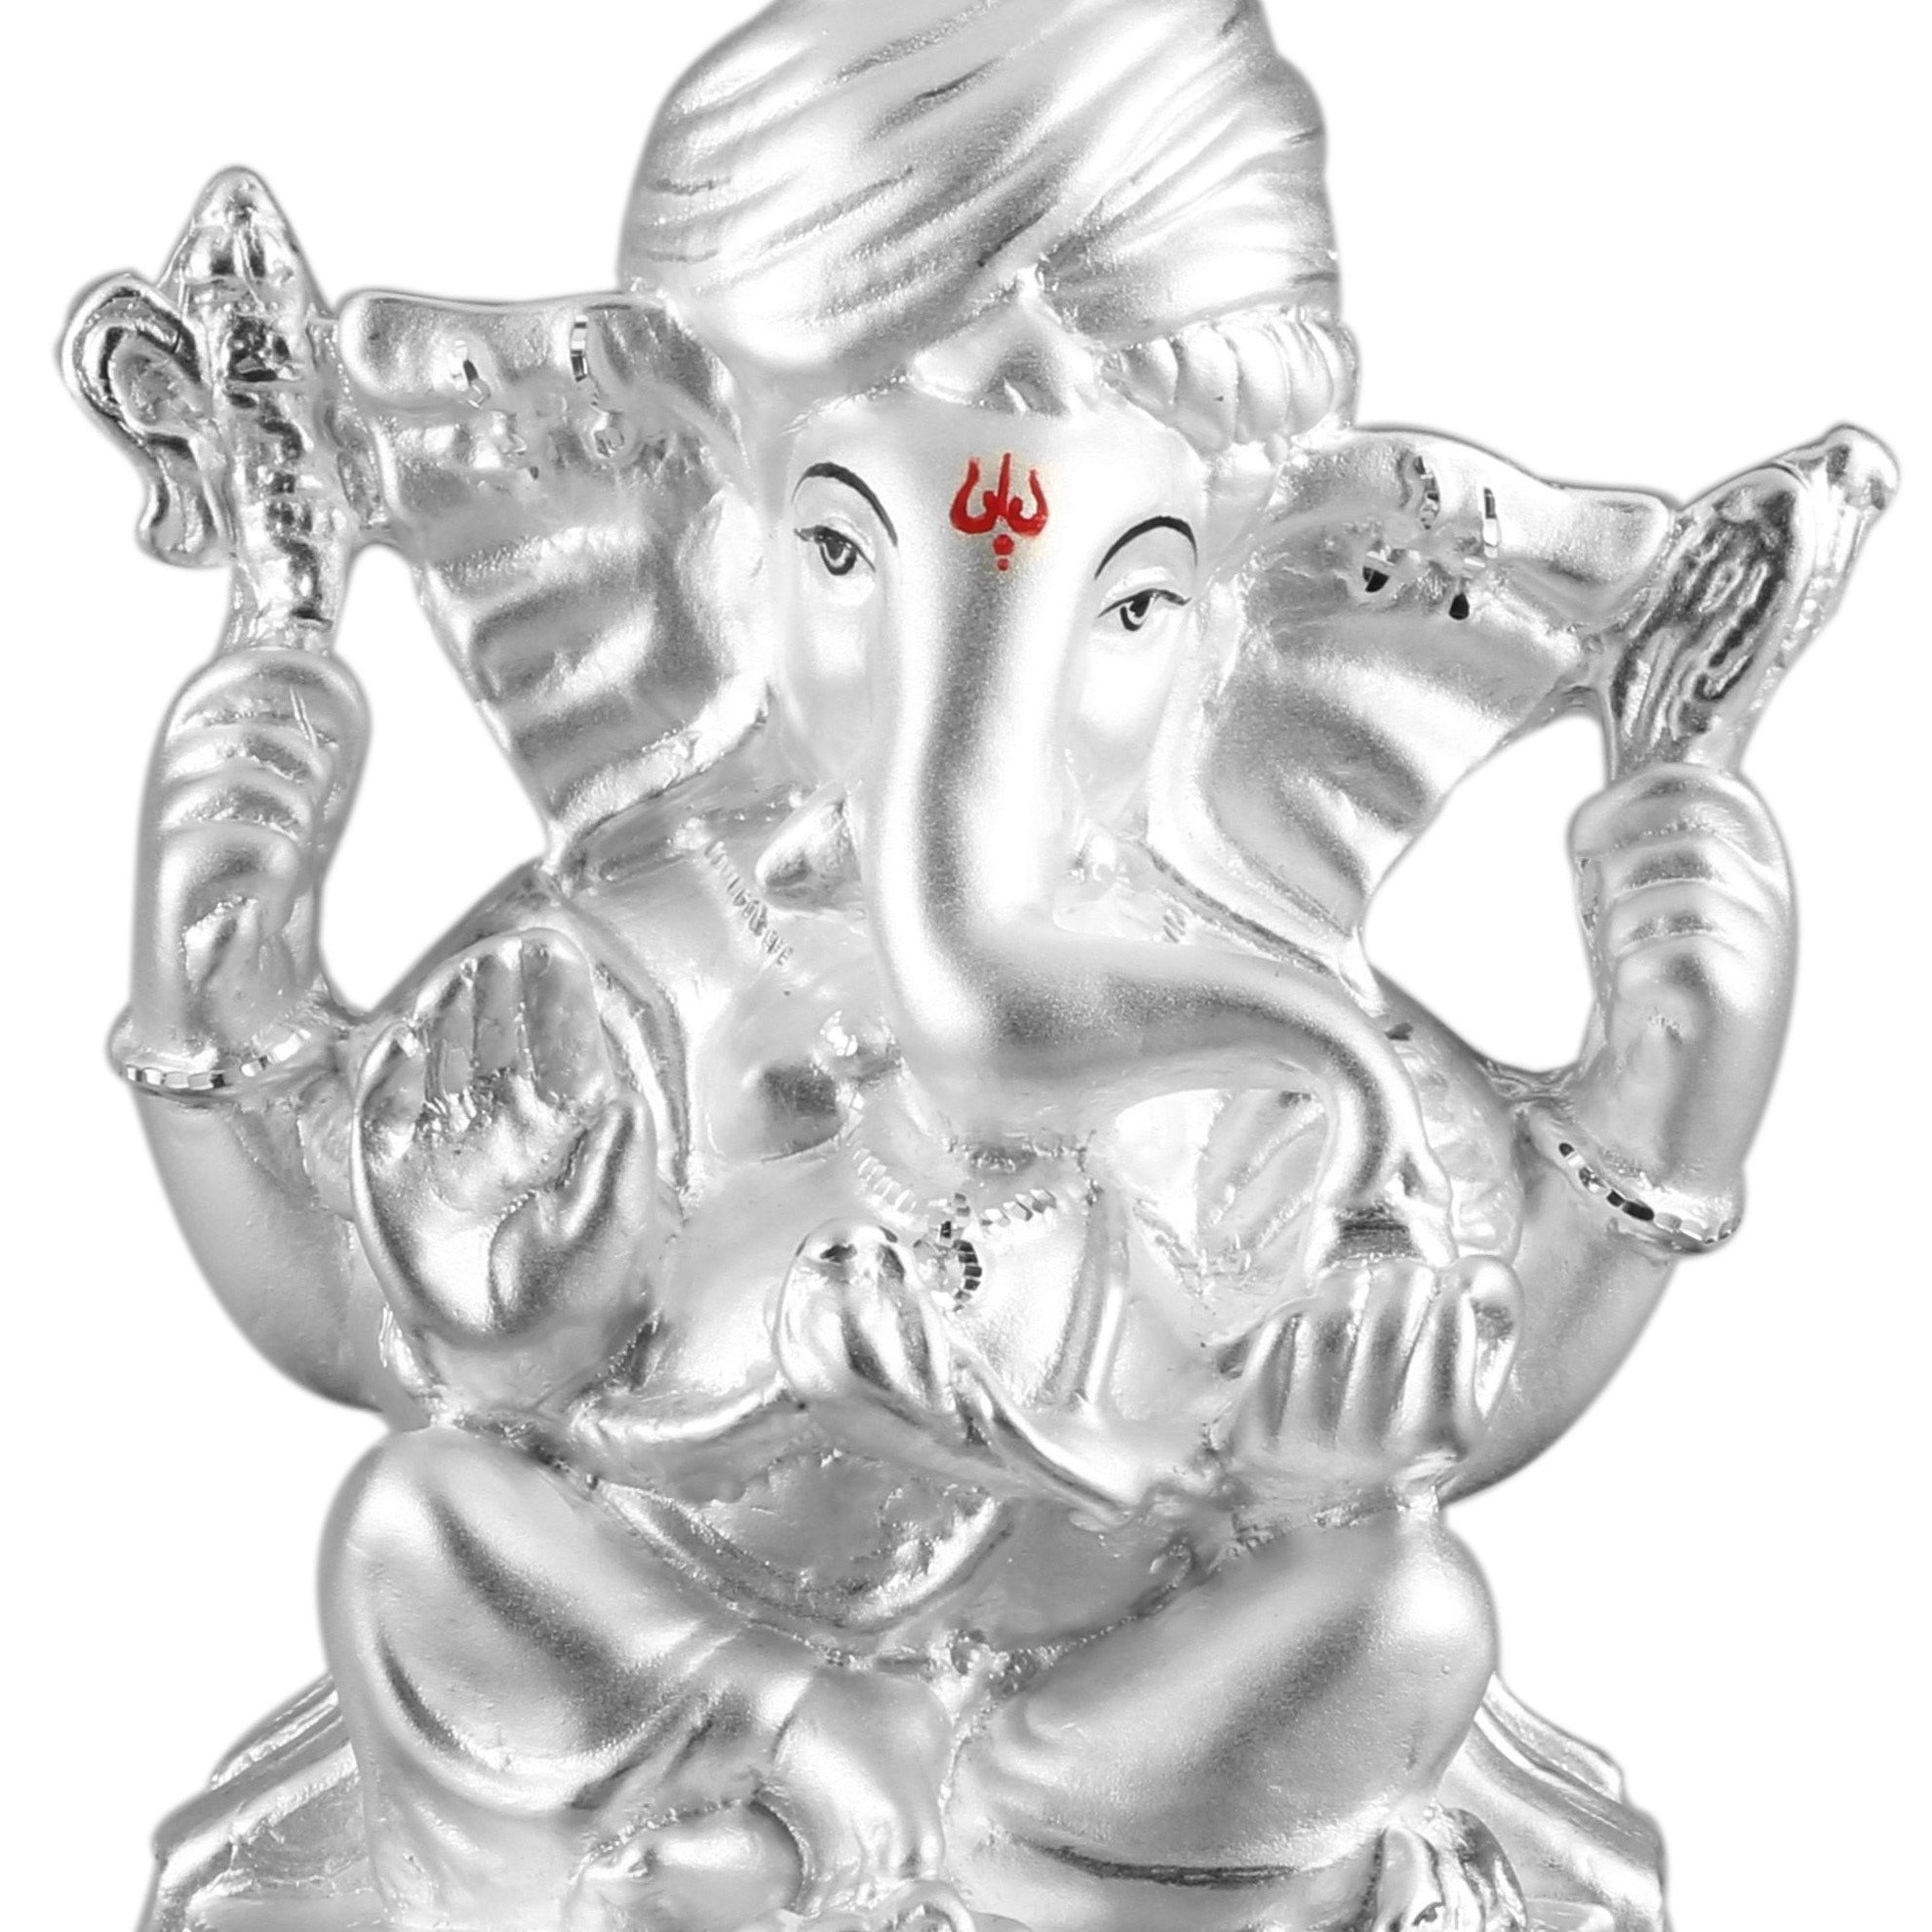 999 Pure Silver Ganesha Idol By Krysaliis Isvara - Krign22 Idols